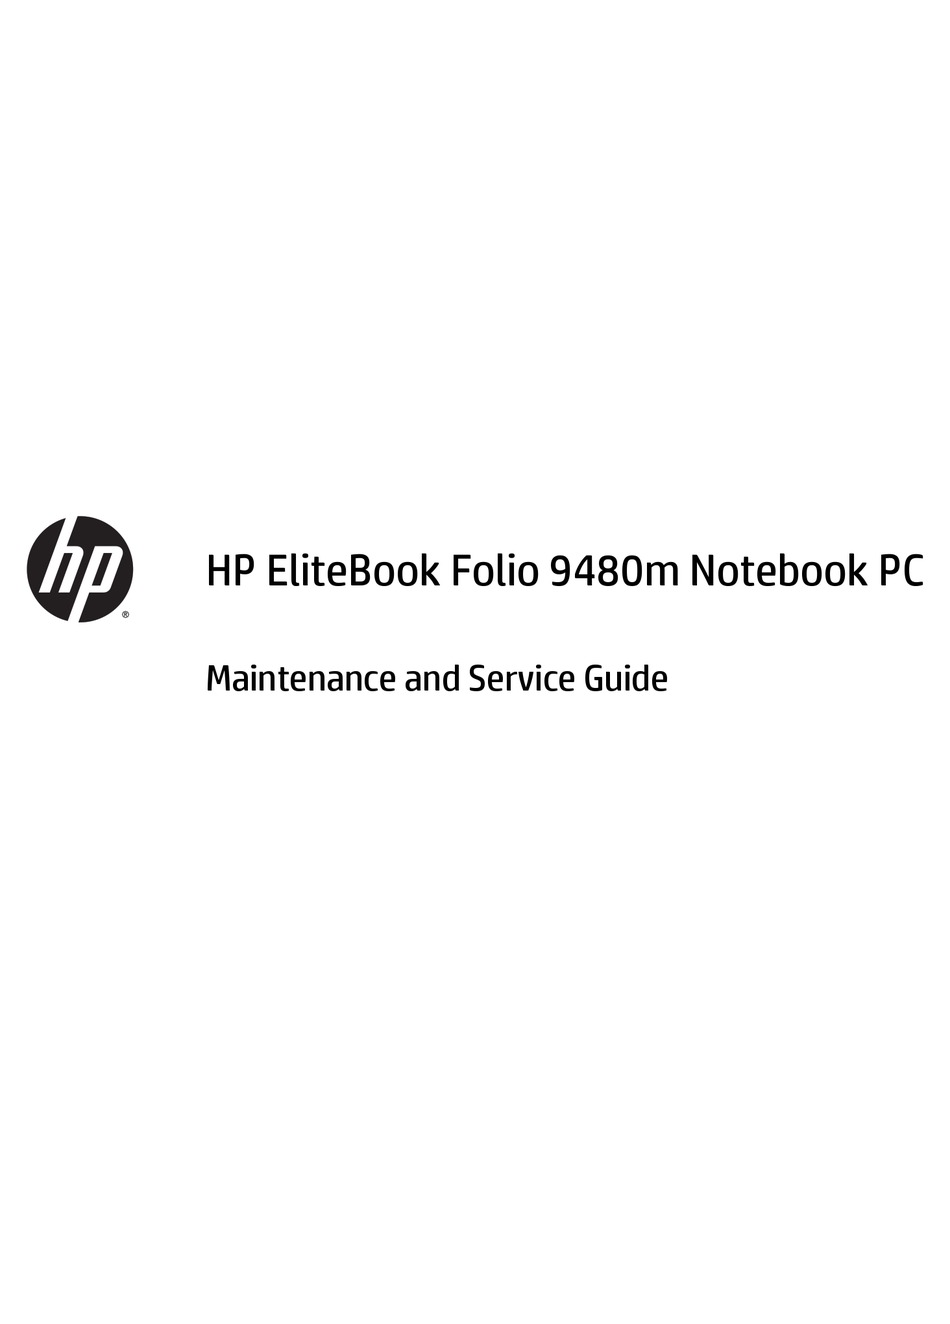 hp elitebook folio 9480m drivers